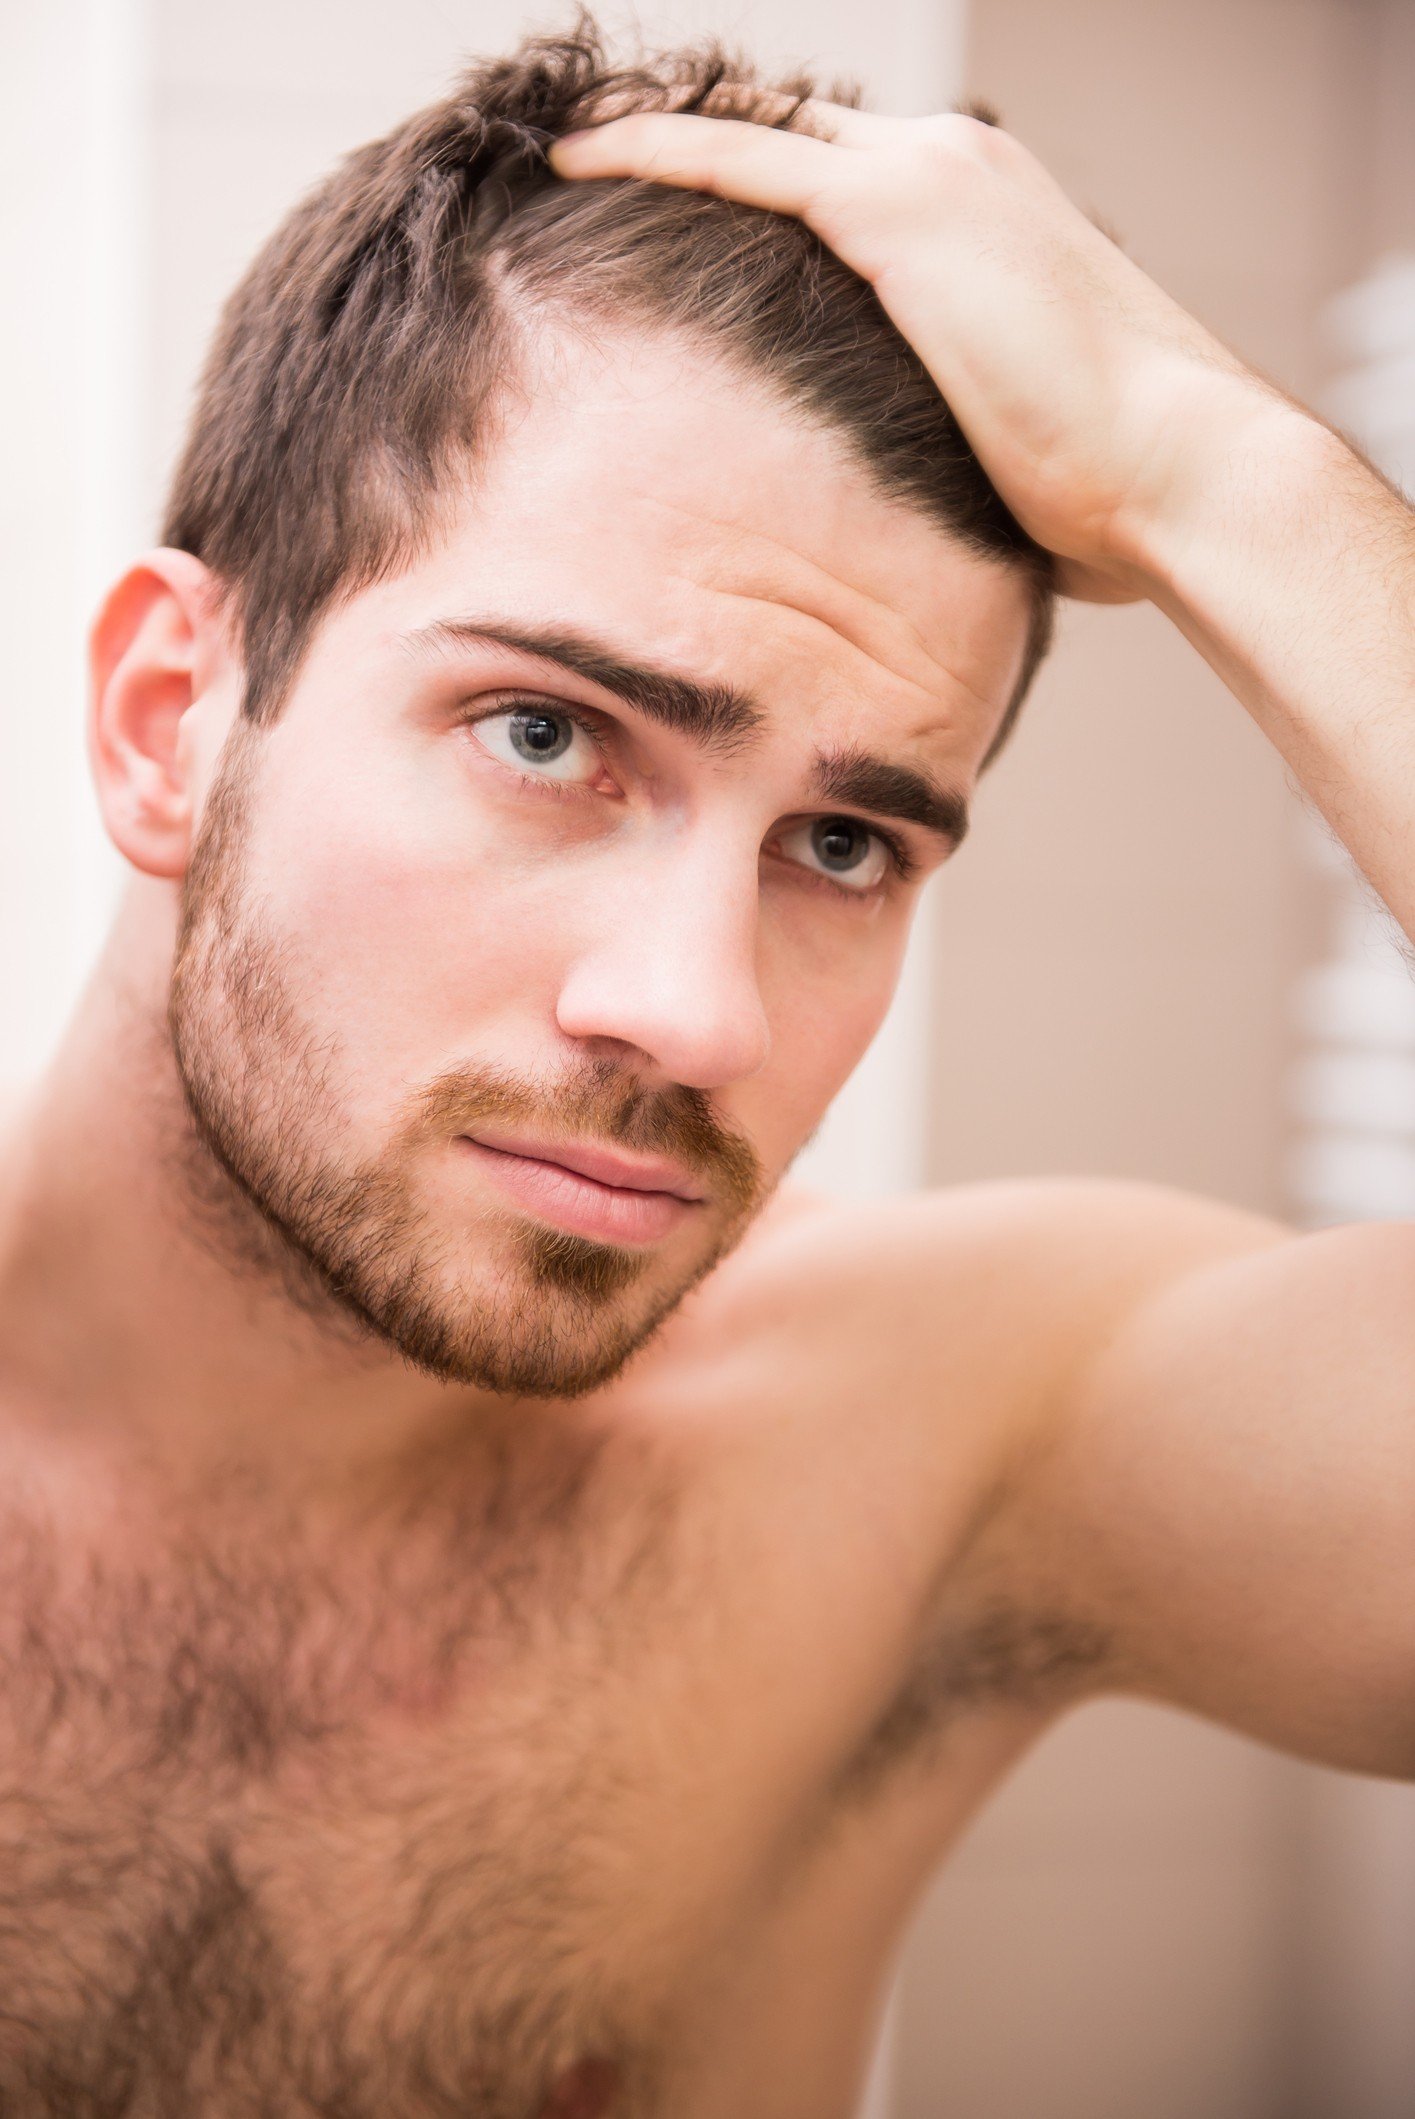 Mit haarschnitt geheimratsecken männer Undercut Frisuren